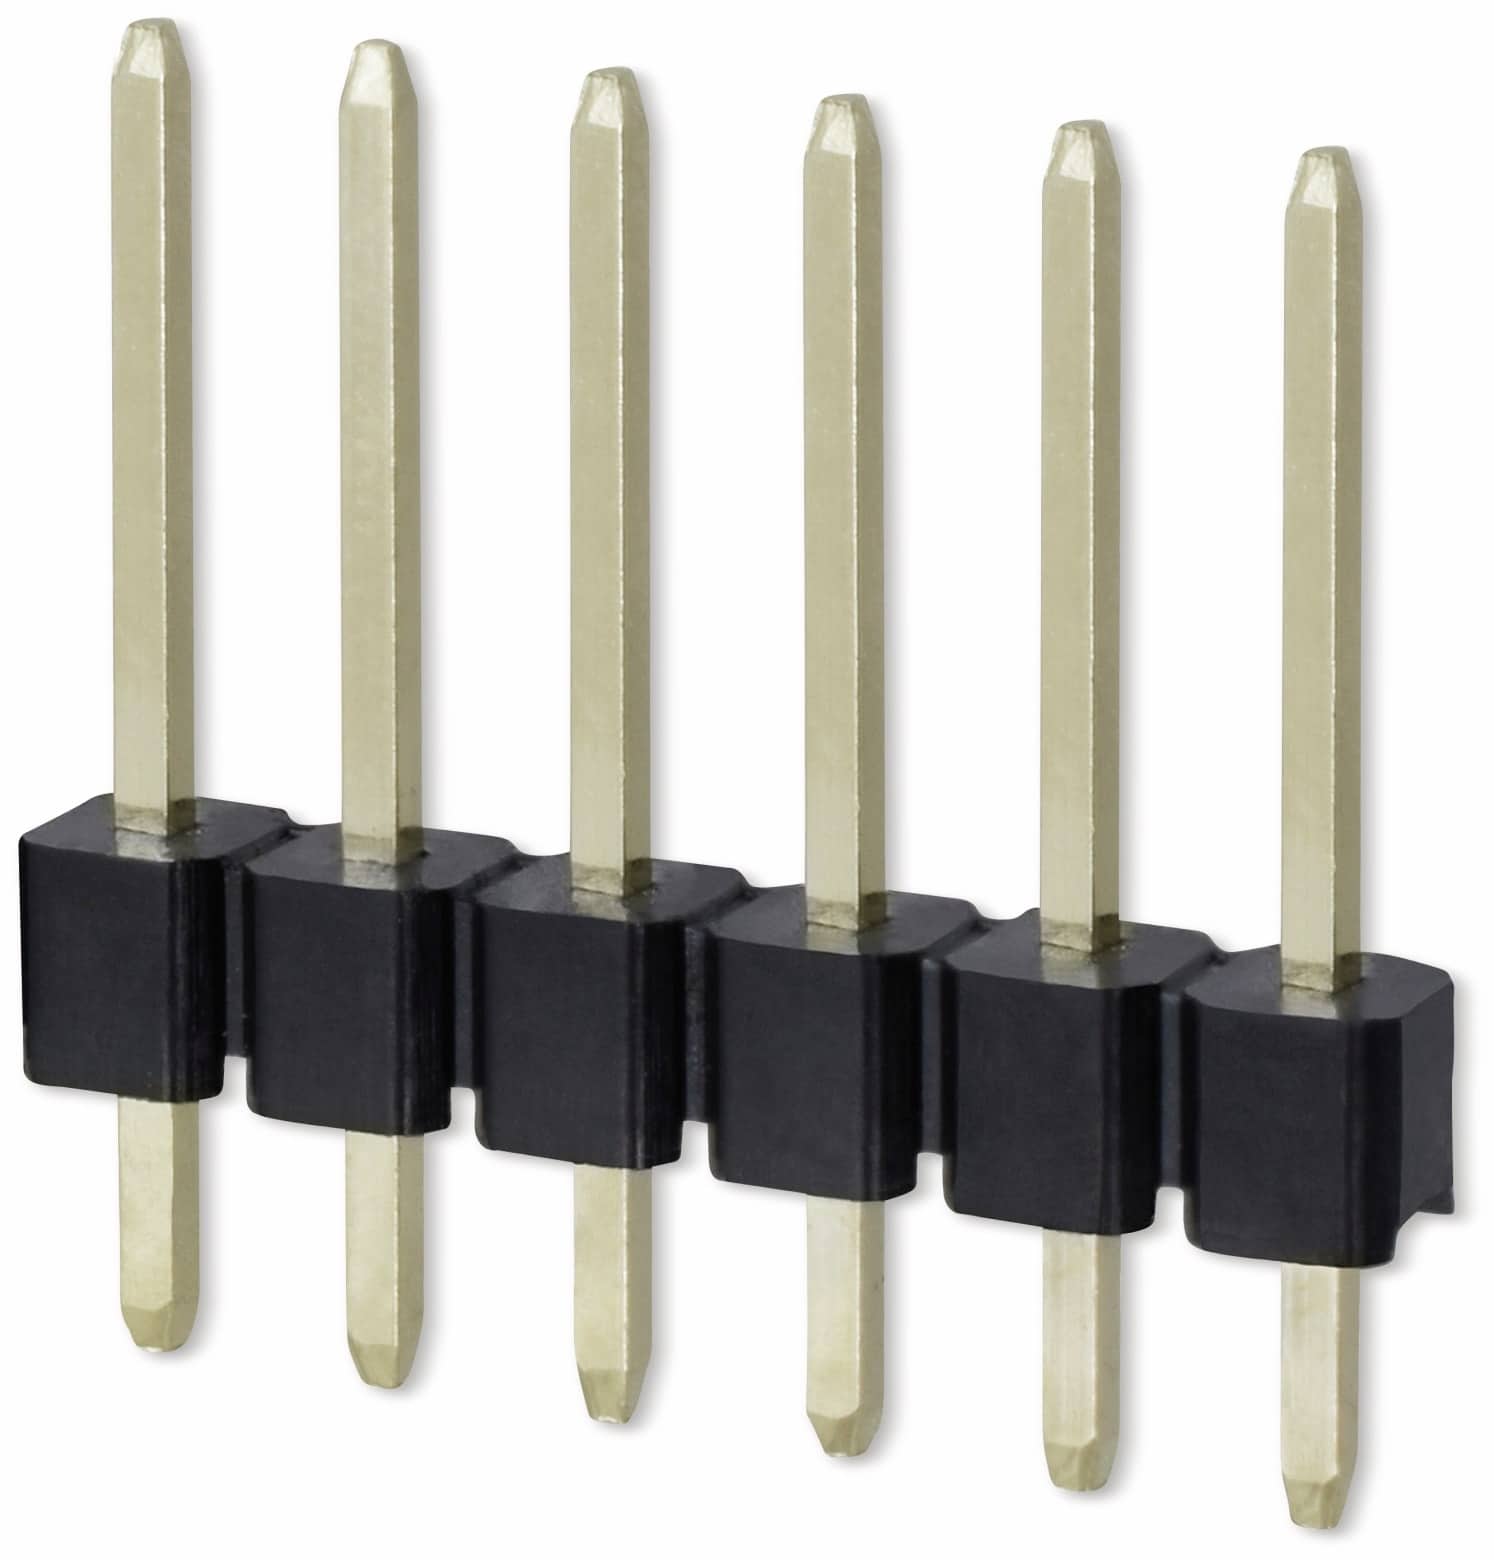 Stiftleiste, 1 x 6, 2,54 mm, gerade, 0,8µ Au (Gold), 5 Stück